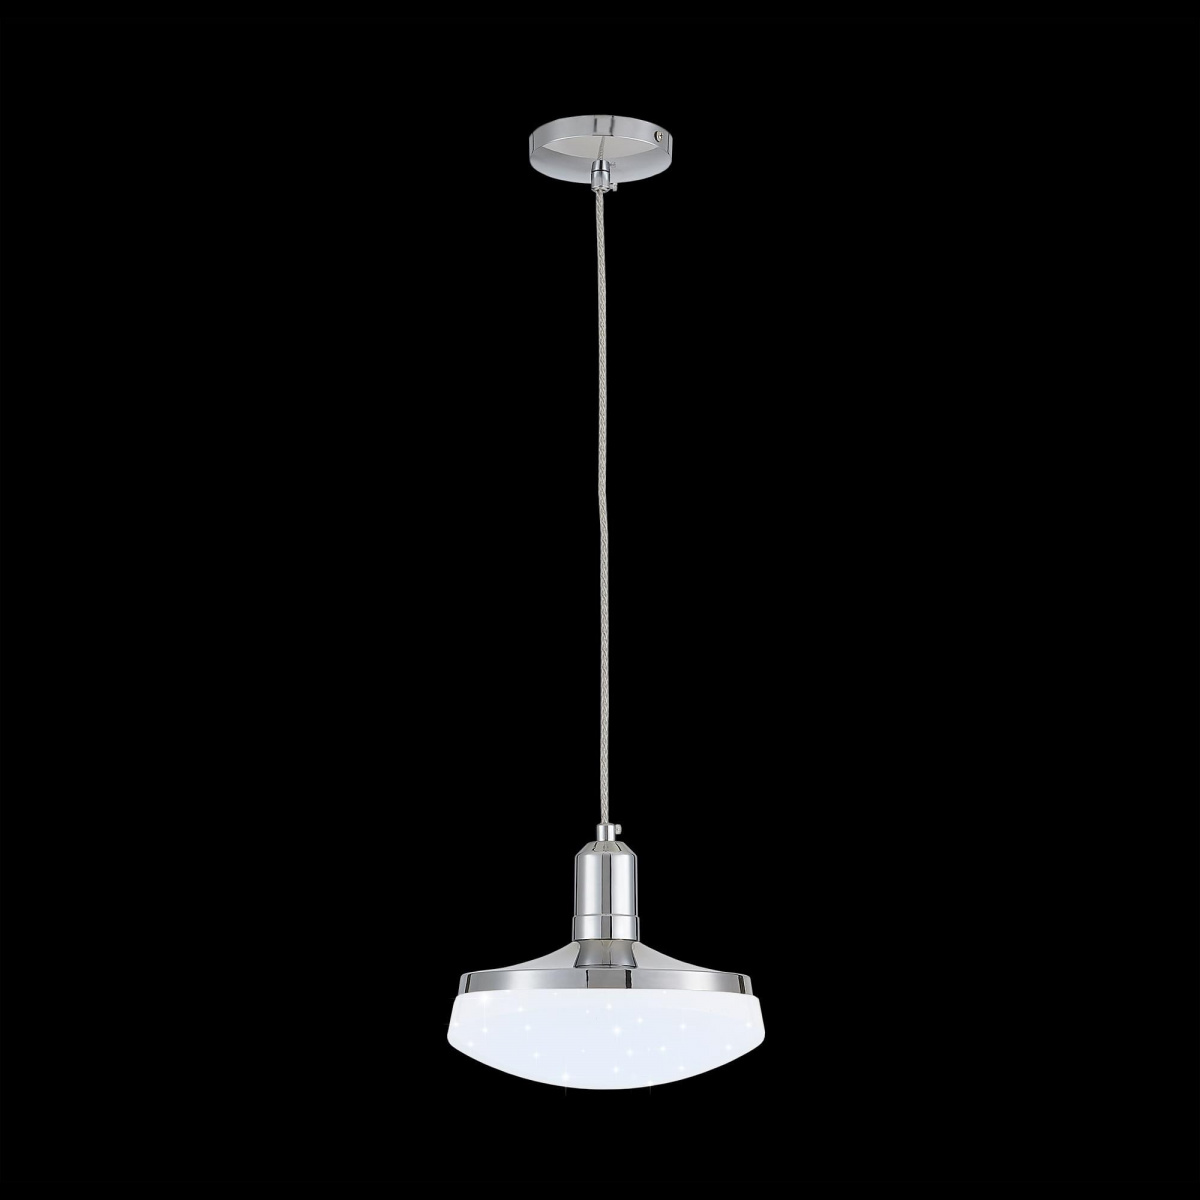 подвесной светильник citilux тамбо (tambo), артикул CL716111Nz